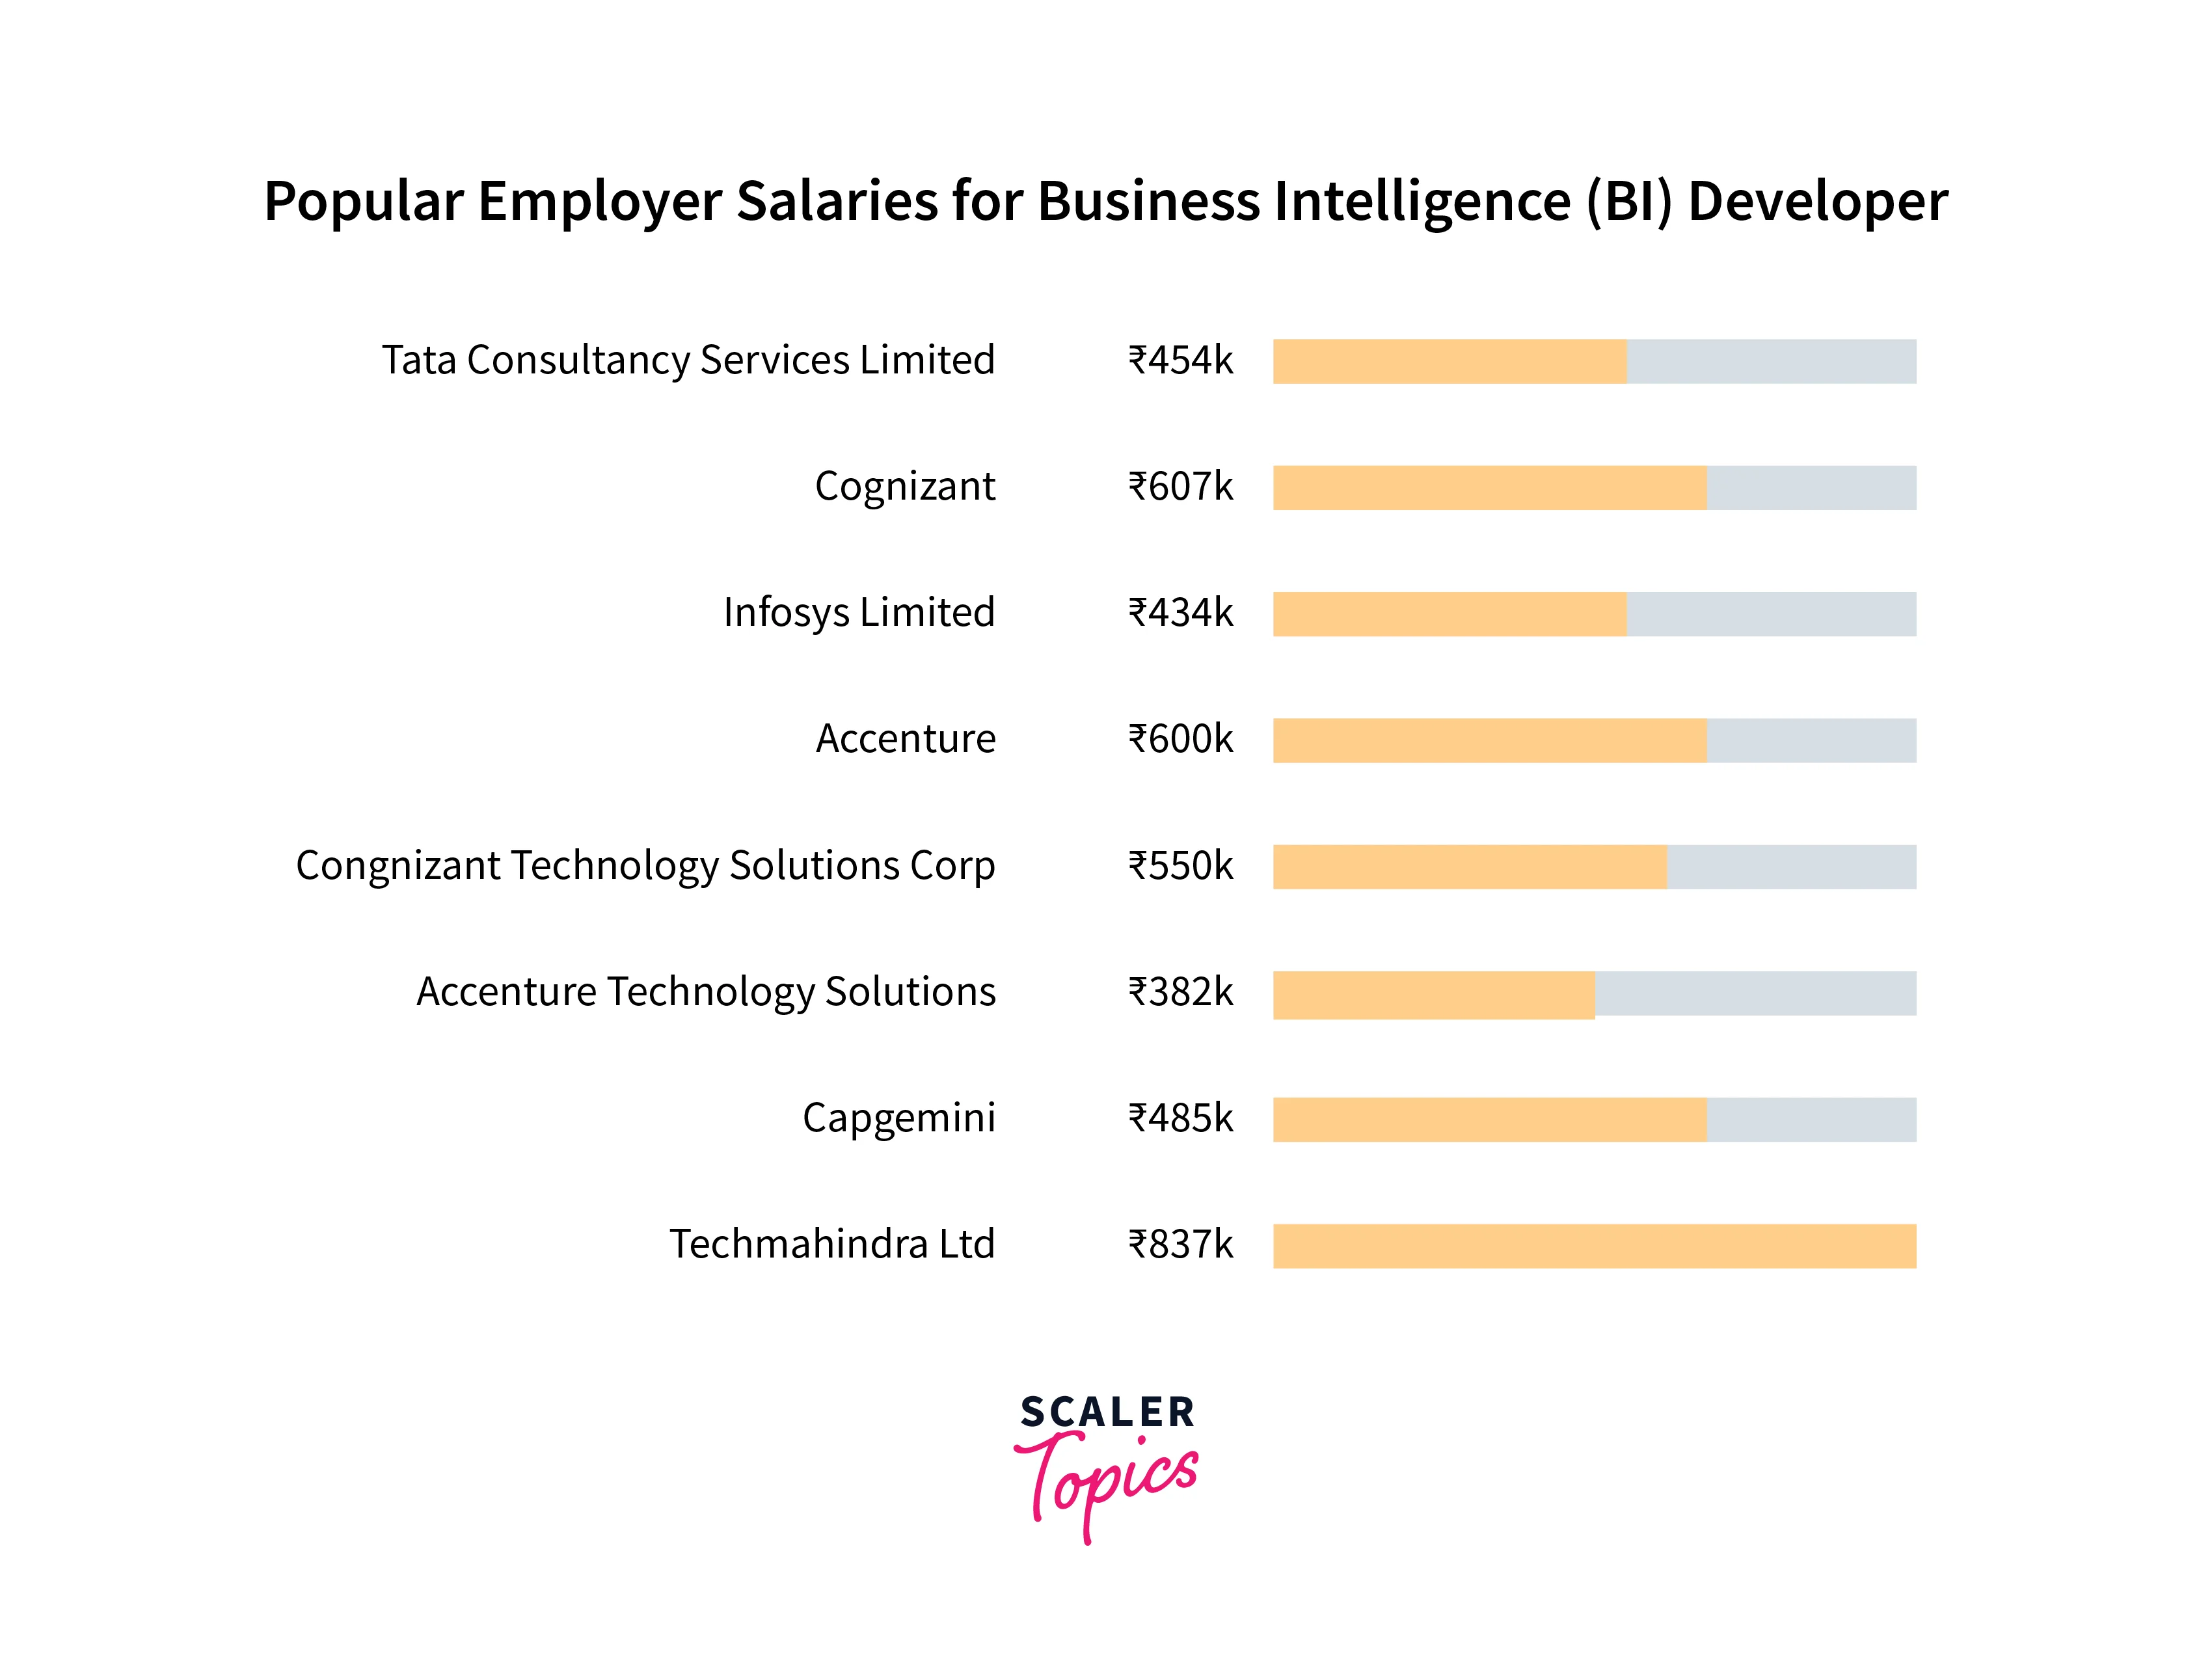 bi developer salary by employer